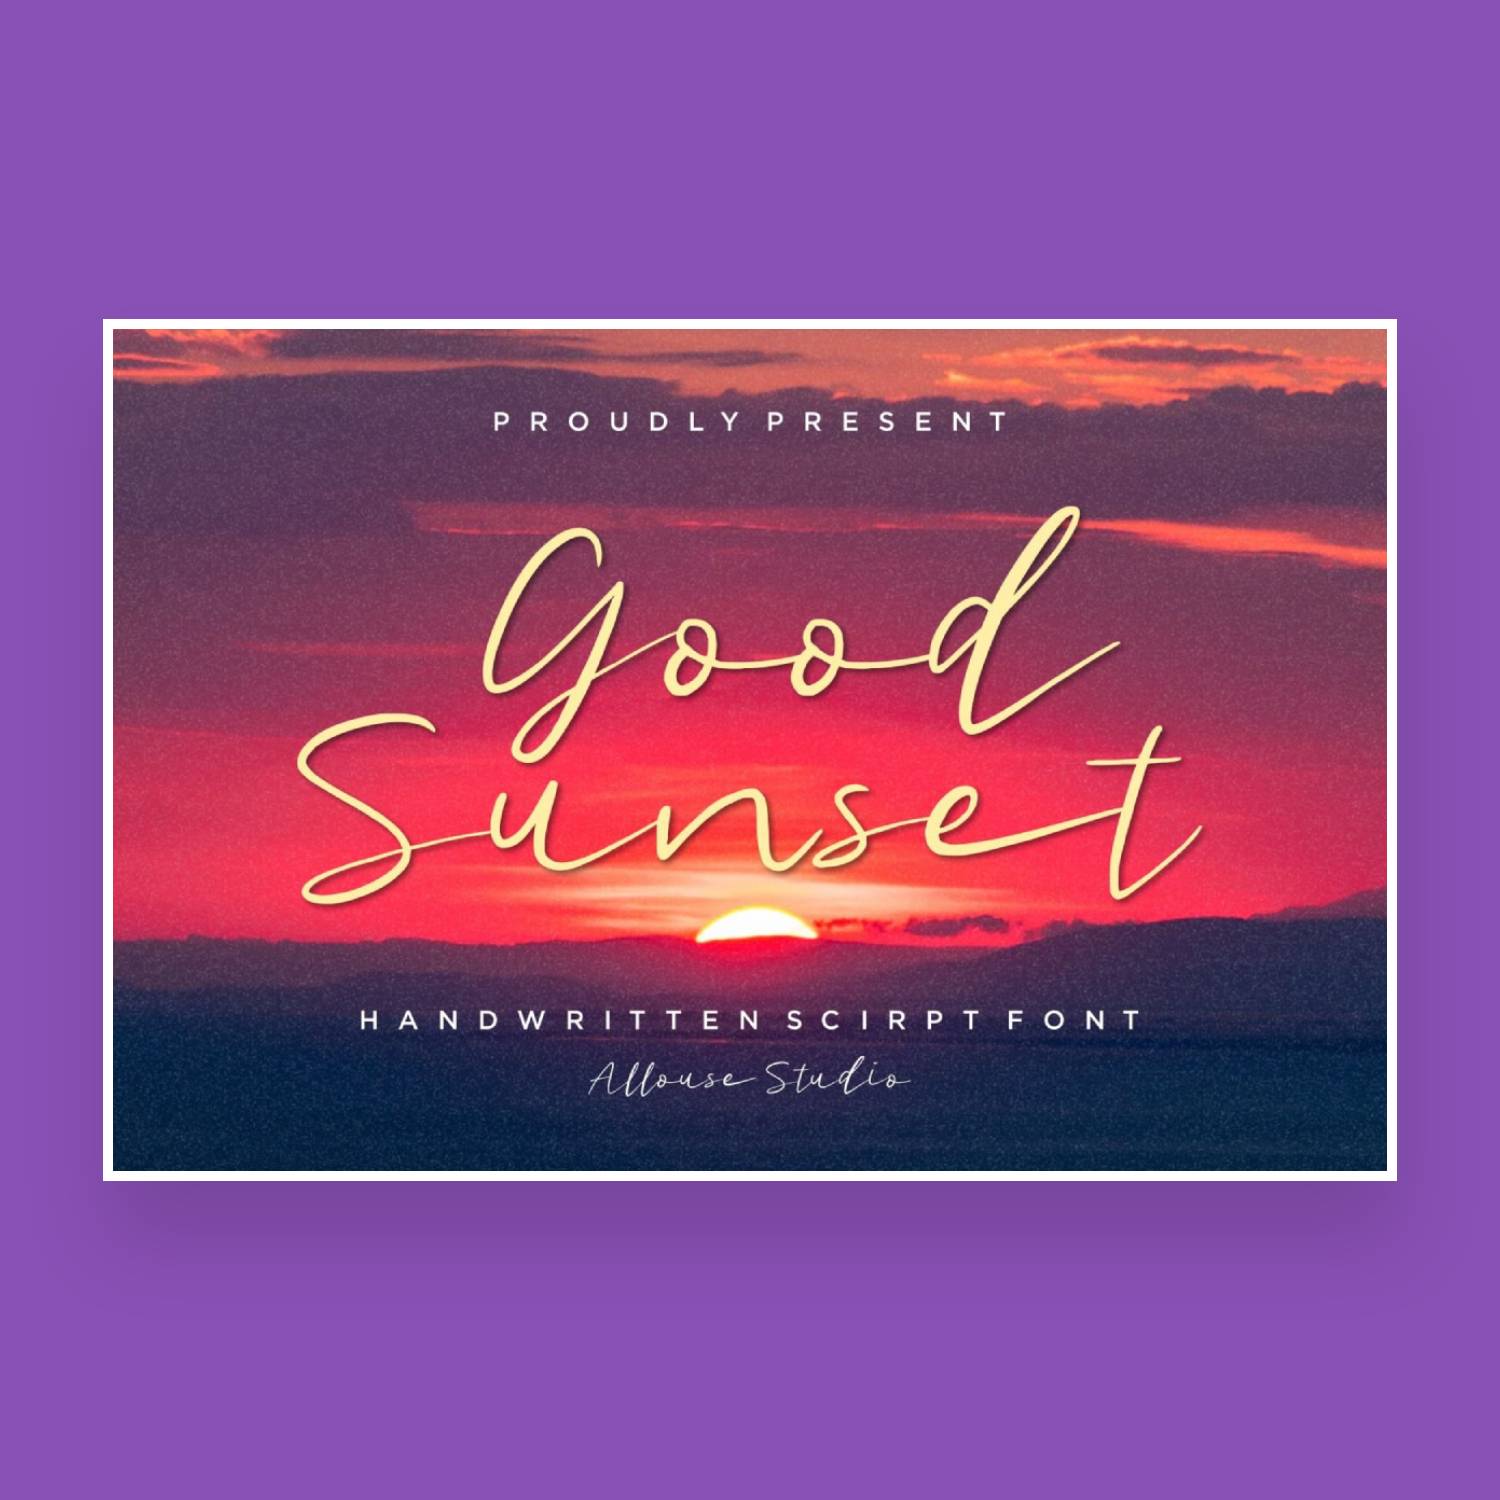 Good sunset font main cover.